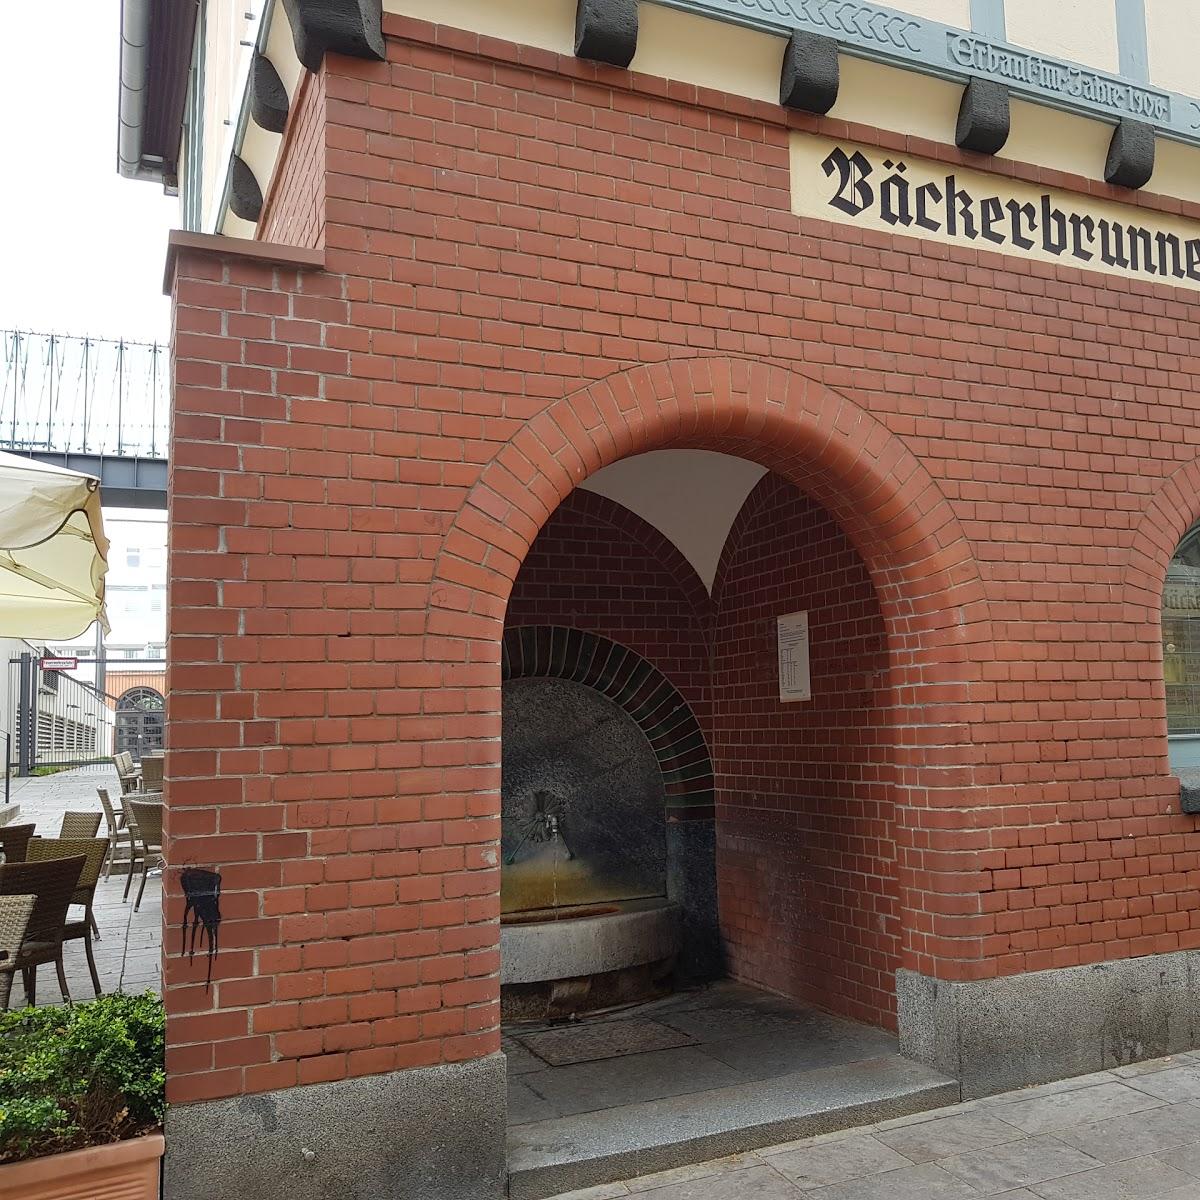 Restaurant "Bäckerbrunnen  Die Altstadtkneipe " in  Wiesbaden